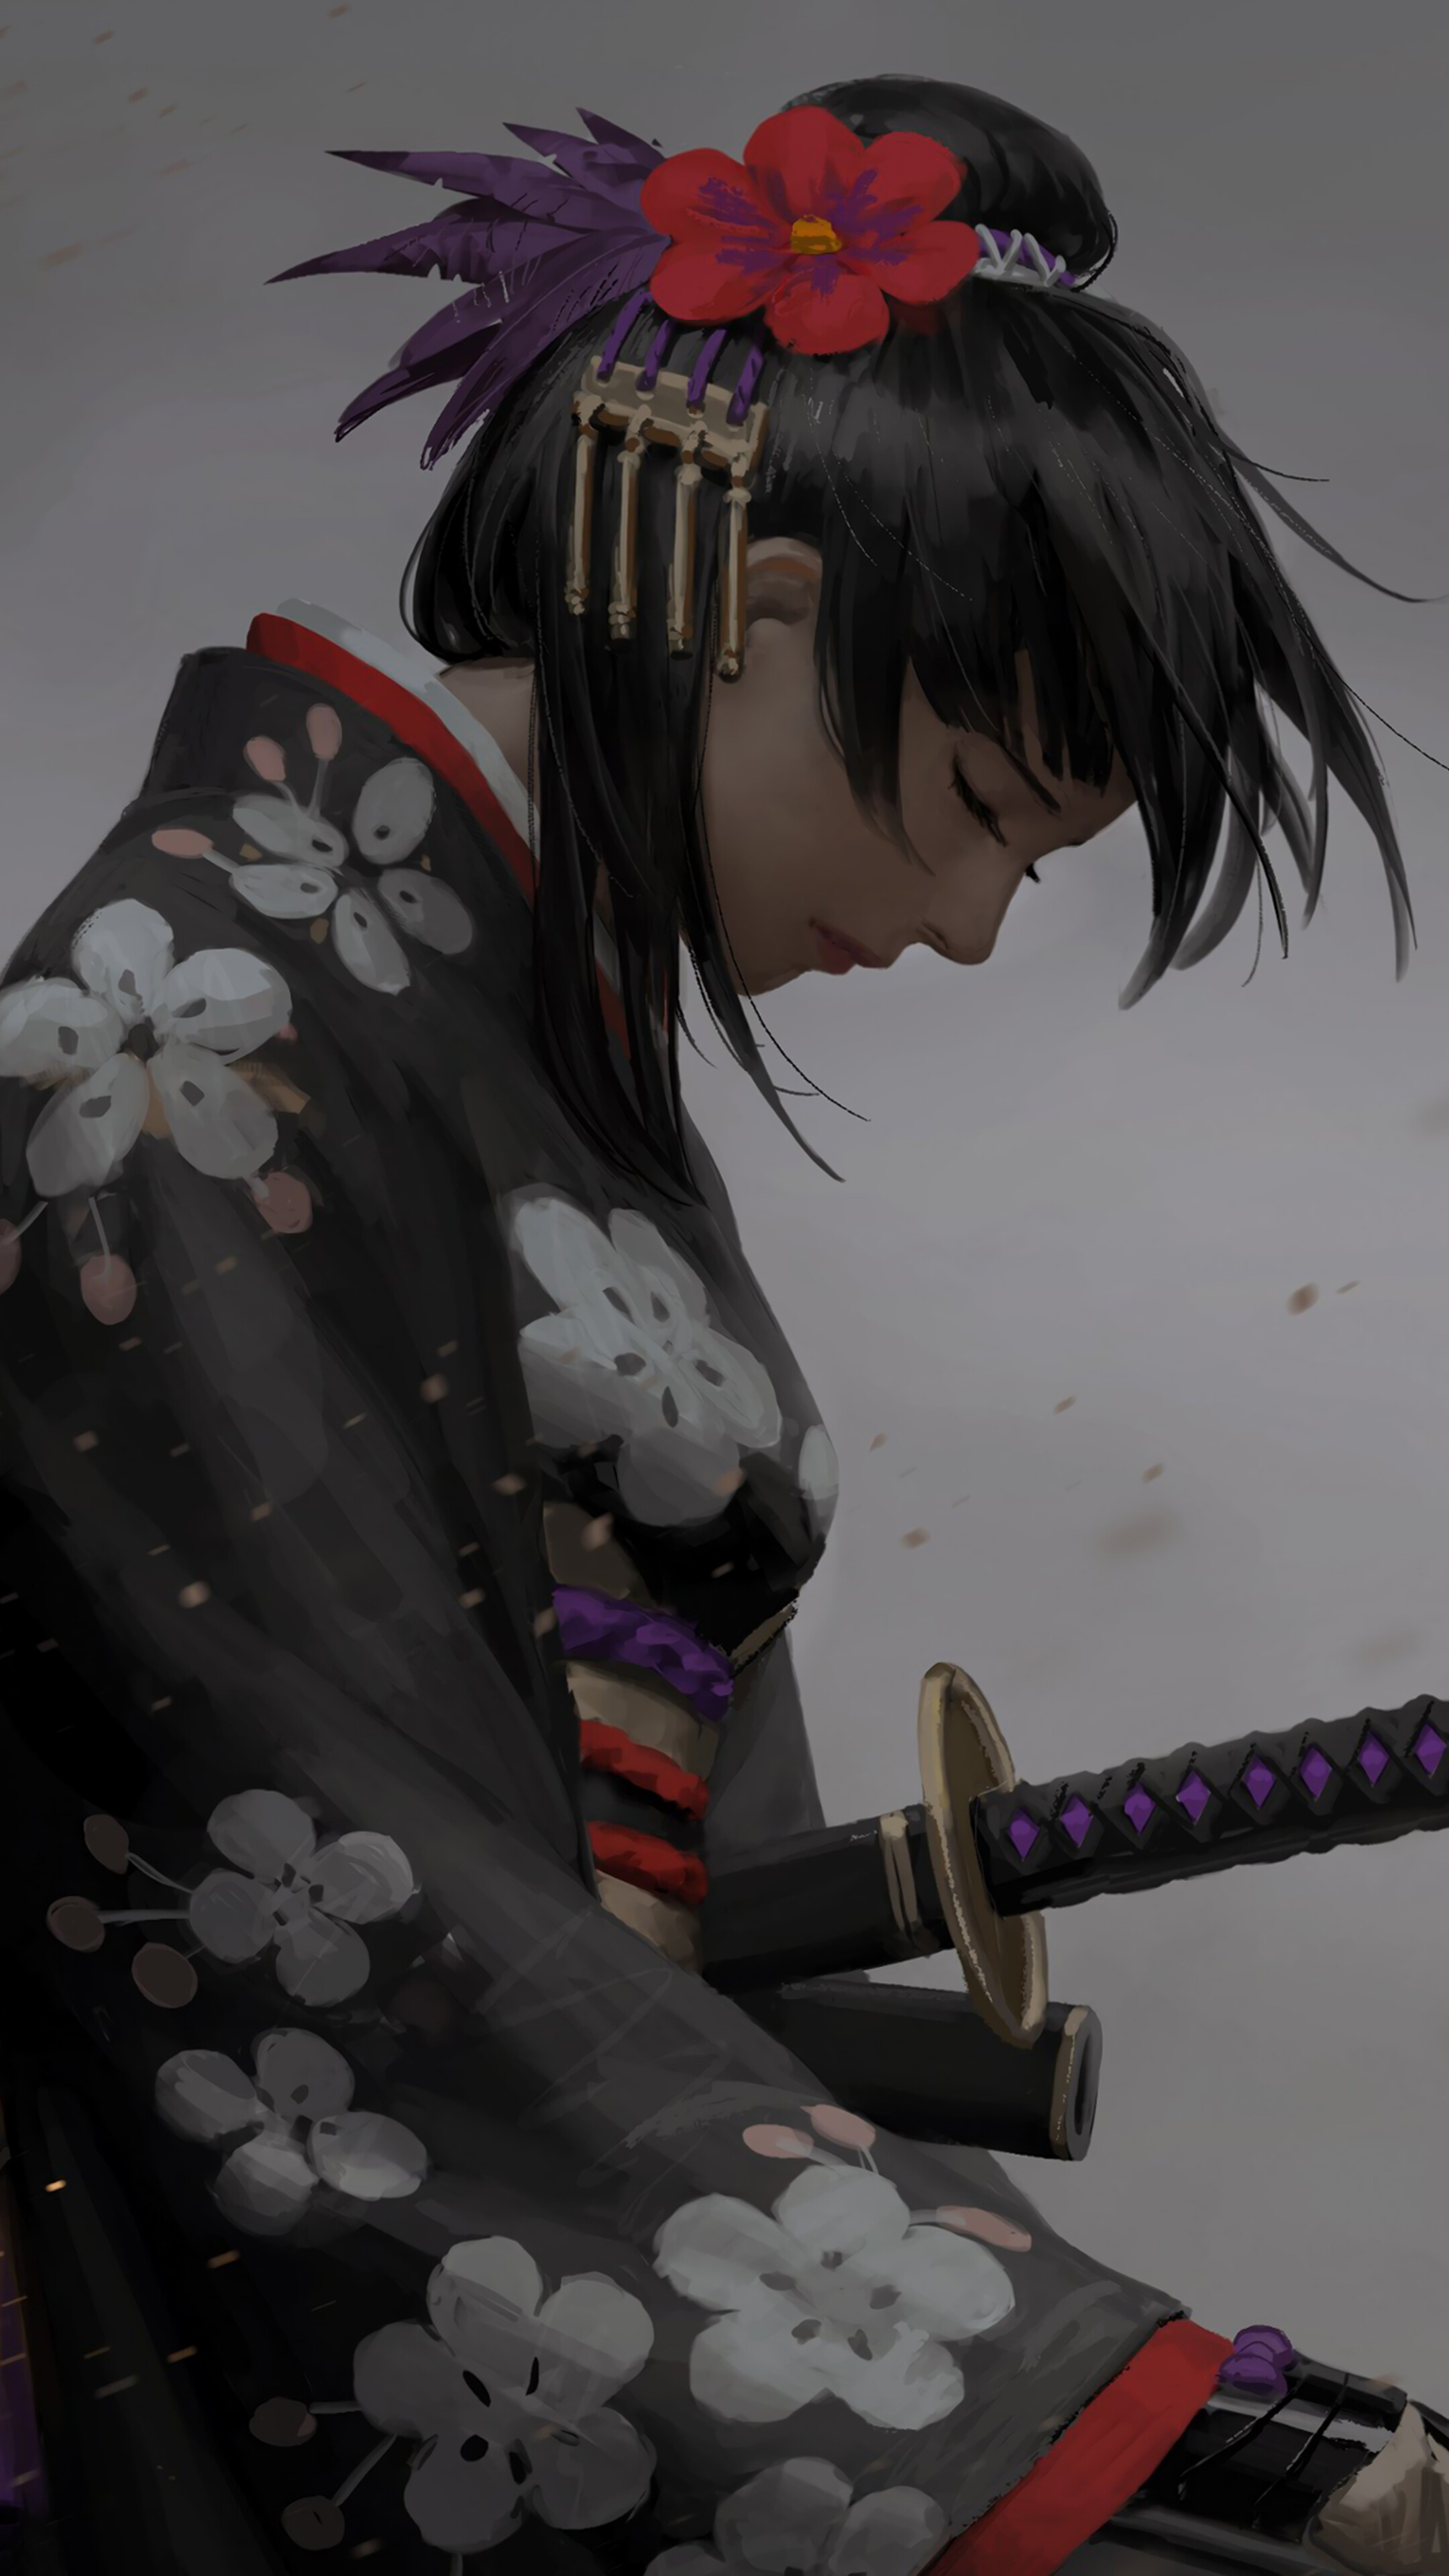 Samurai, Girl, Katana, Fantasy, 4K phone HD Wallpaper, Image, Background, Photo and Picture HD Wallpaper